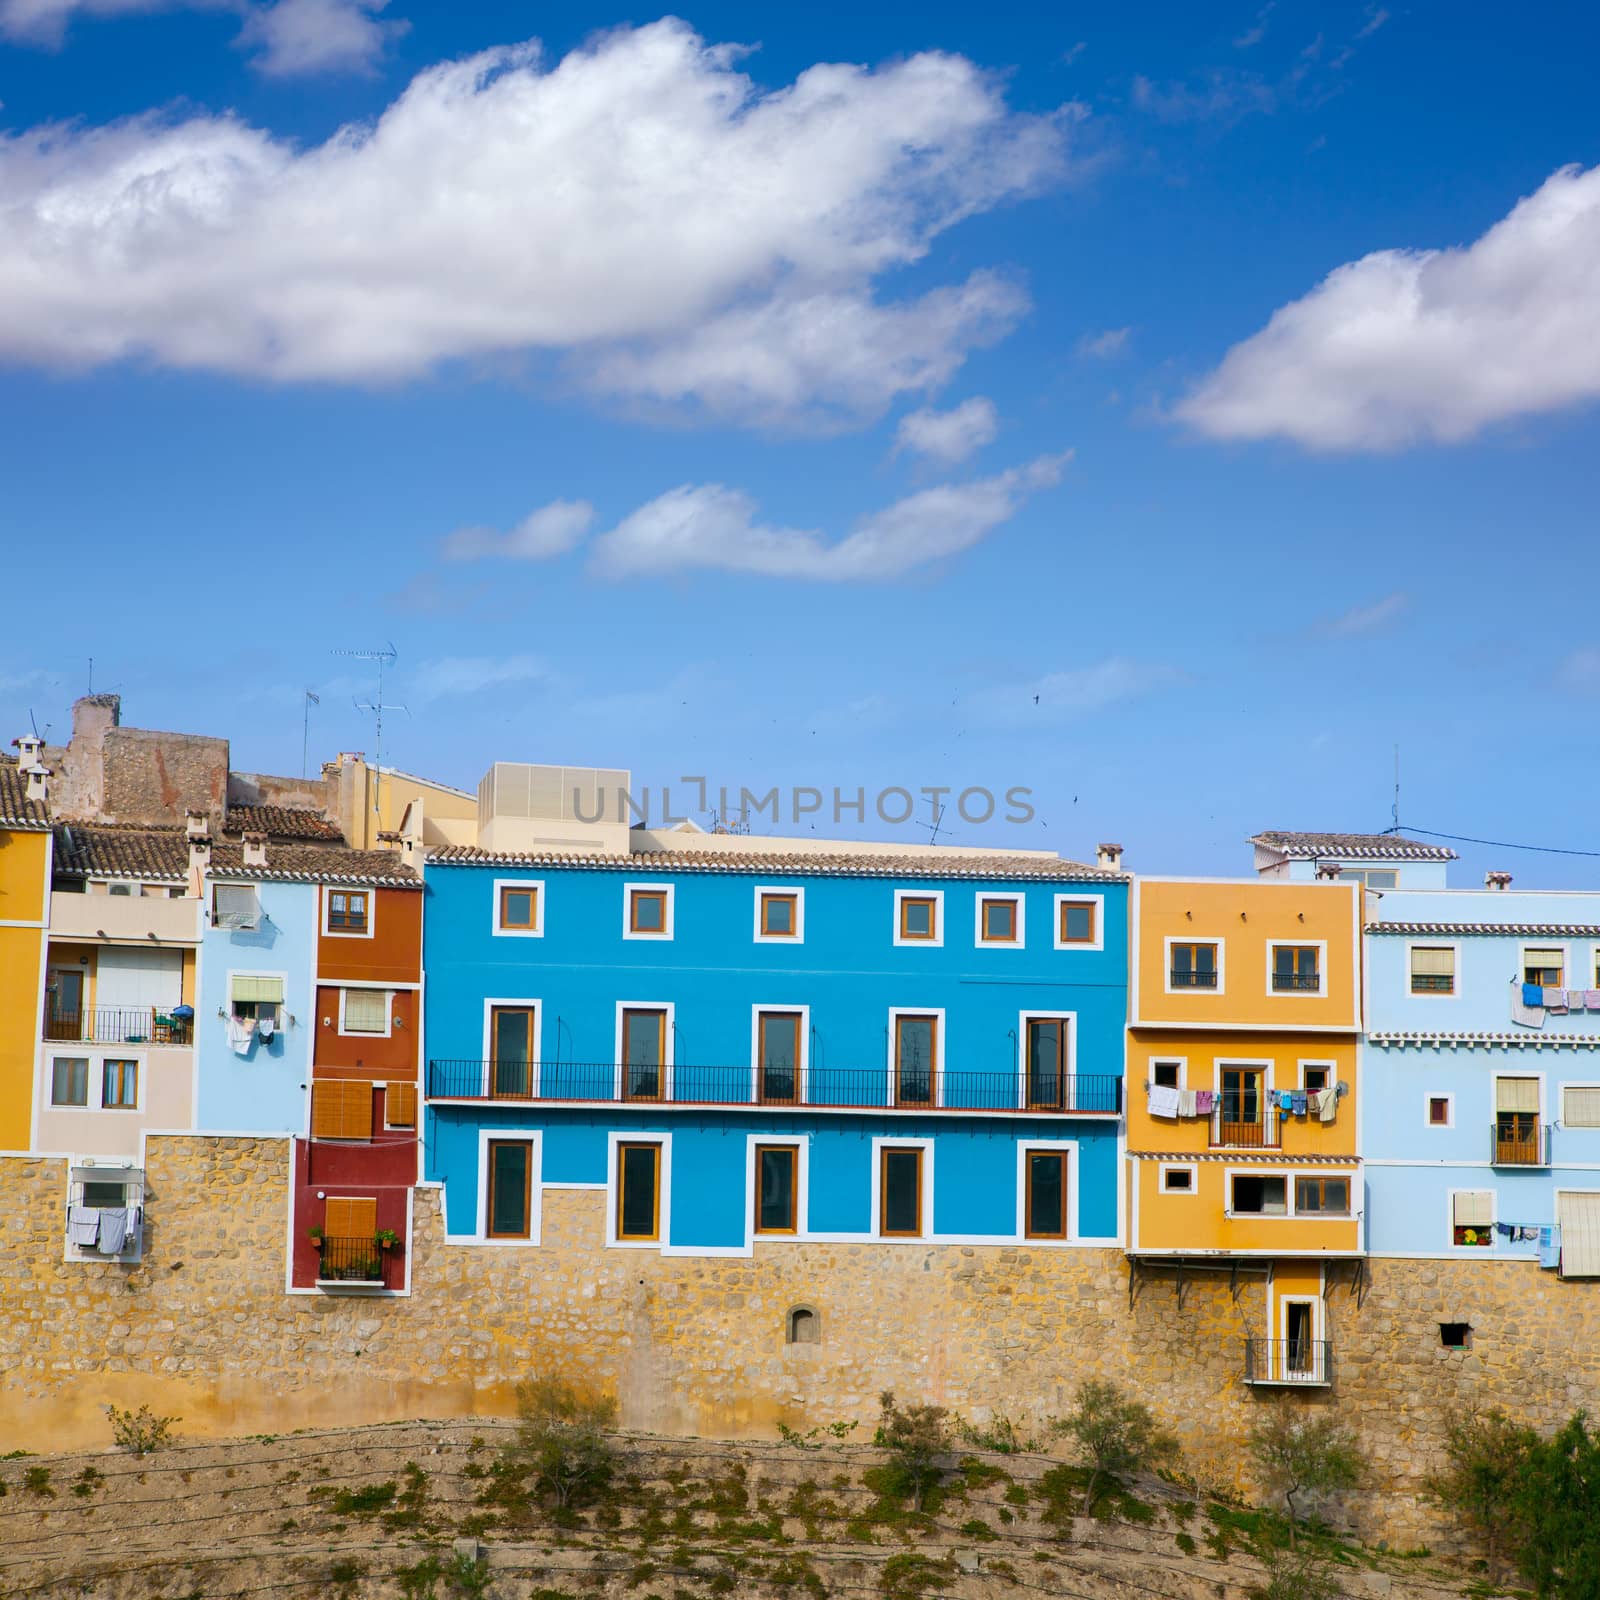 Colorful houses in Villajoyosa La vila Joiosa Alicante at Mediterranean Spain